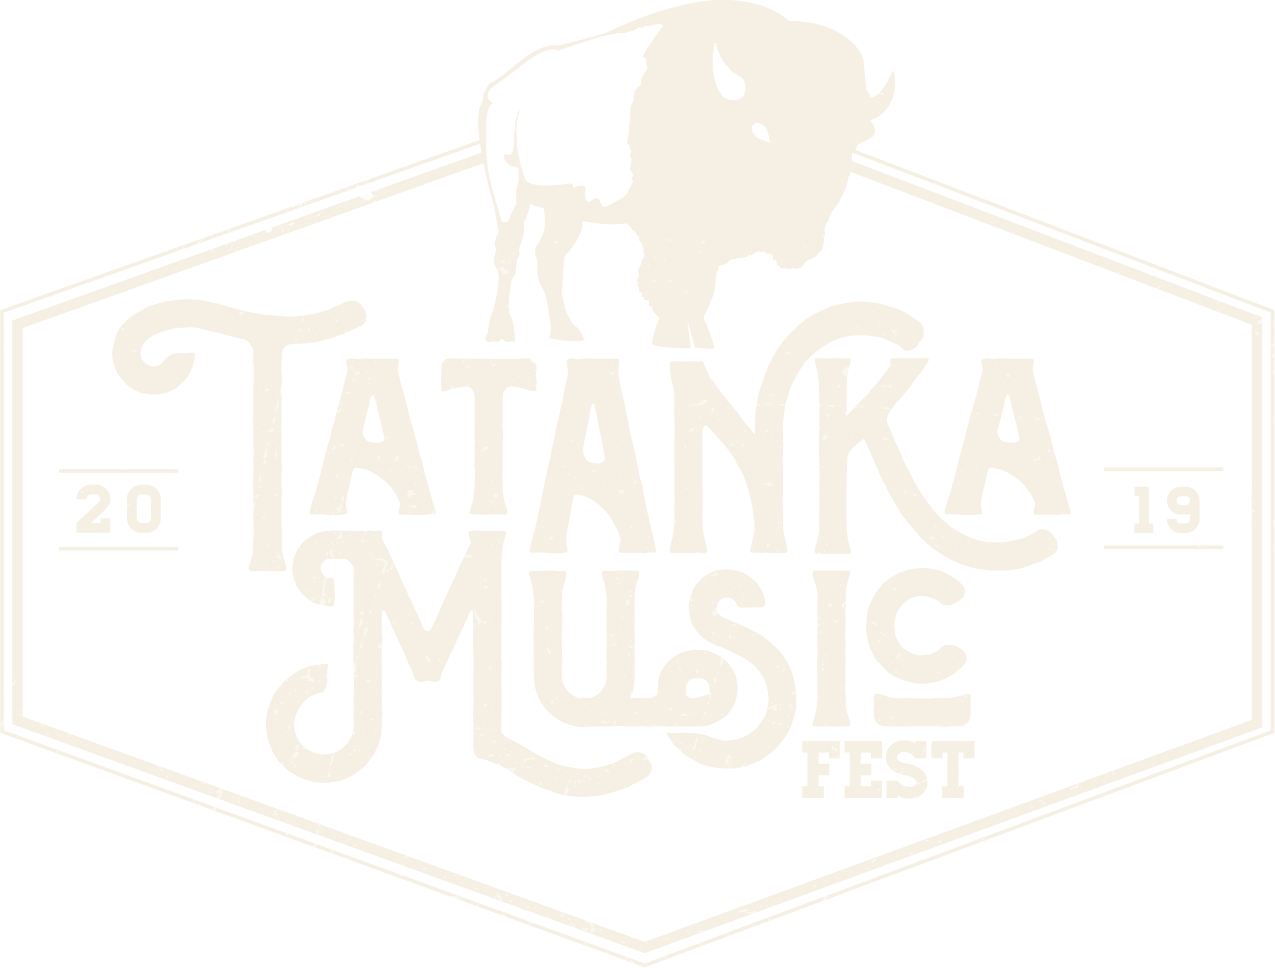 Tatanka Music Fest